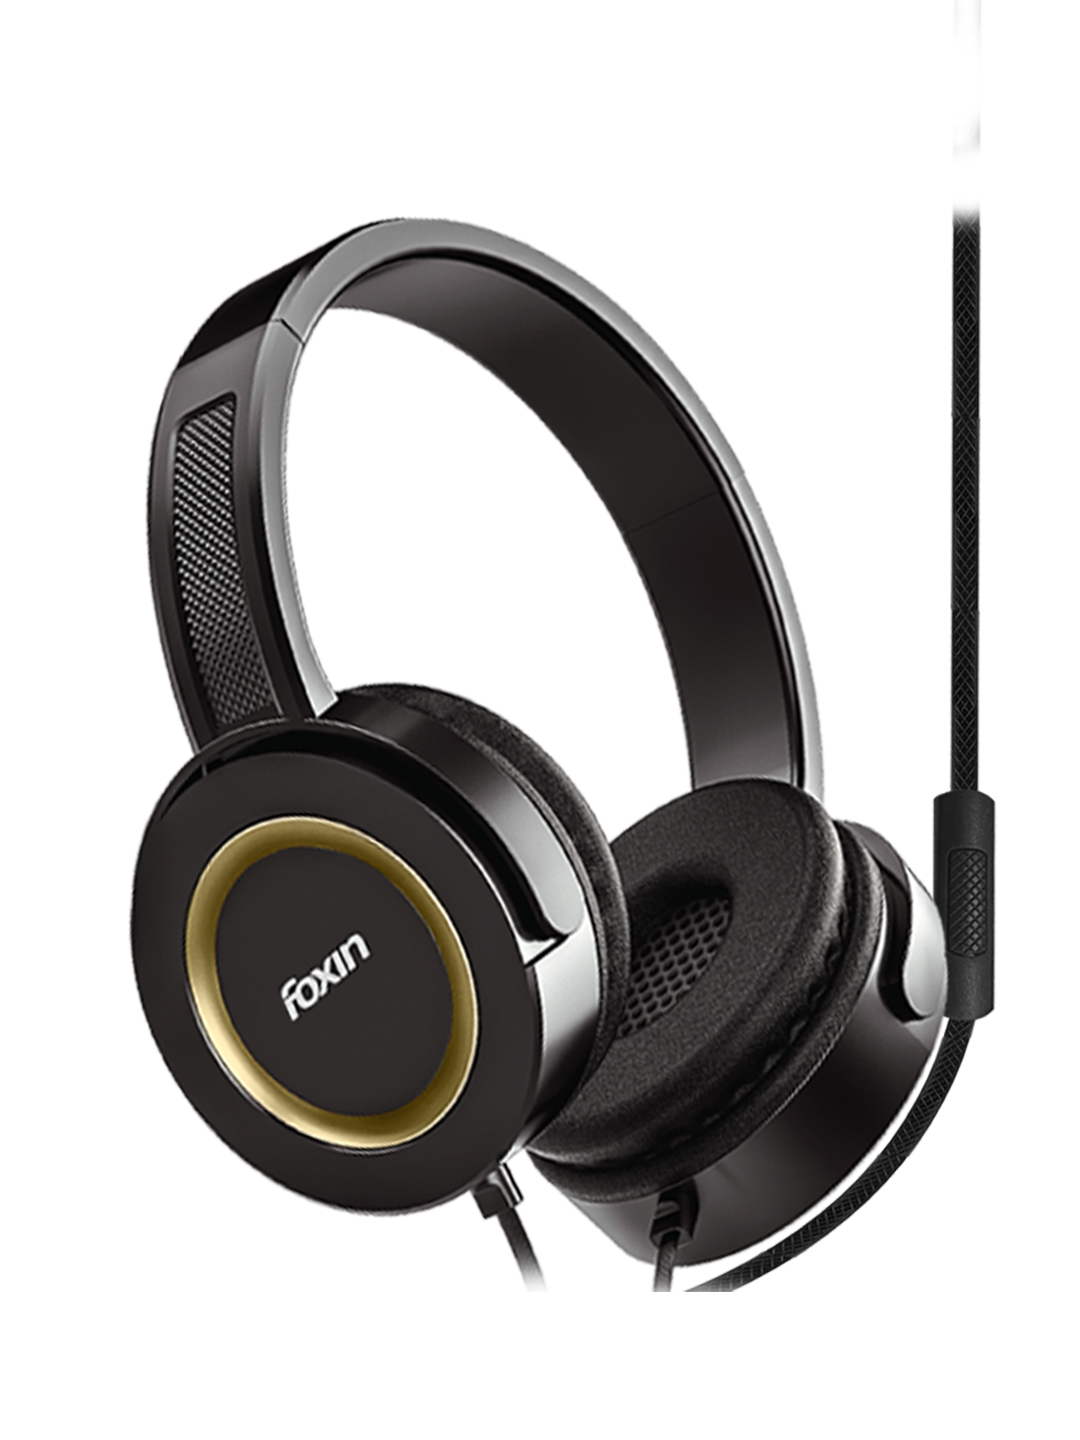 Foxin Roar 308 Wired Headphones Black-Gold